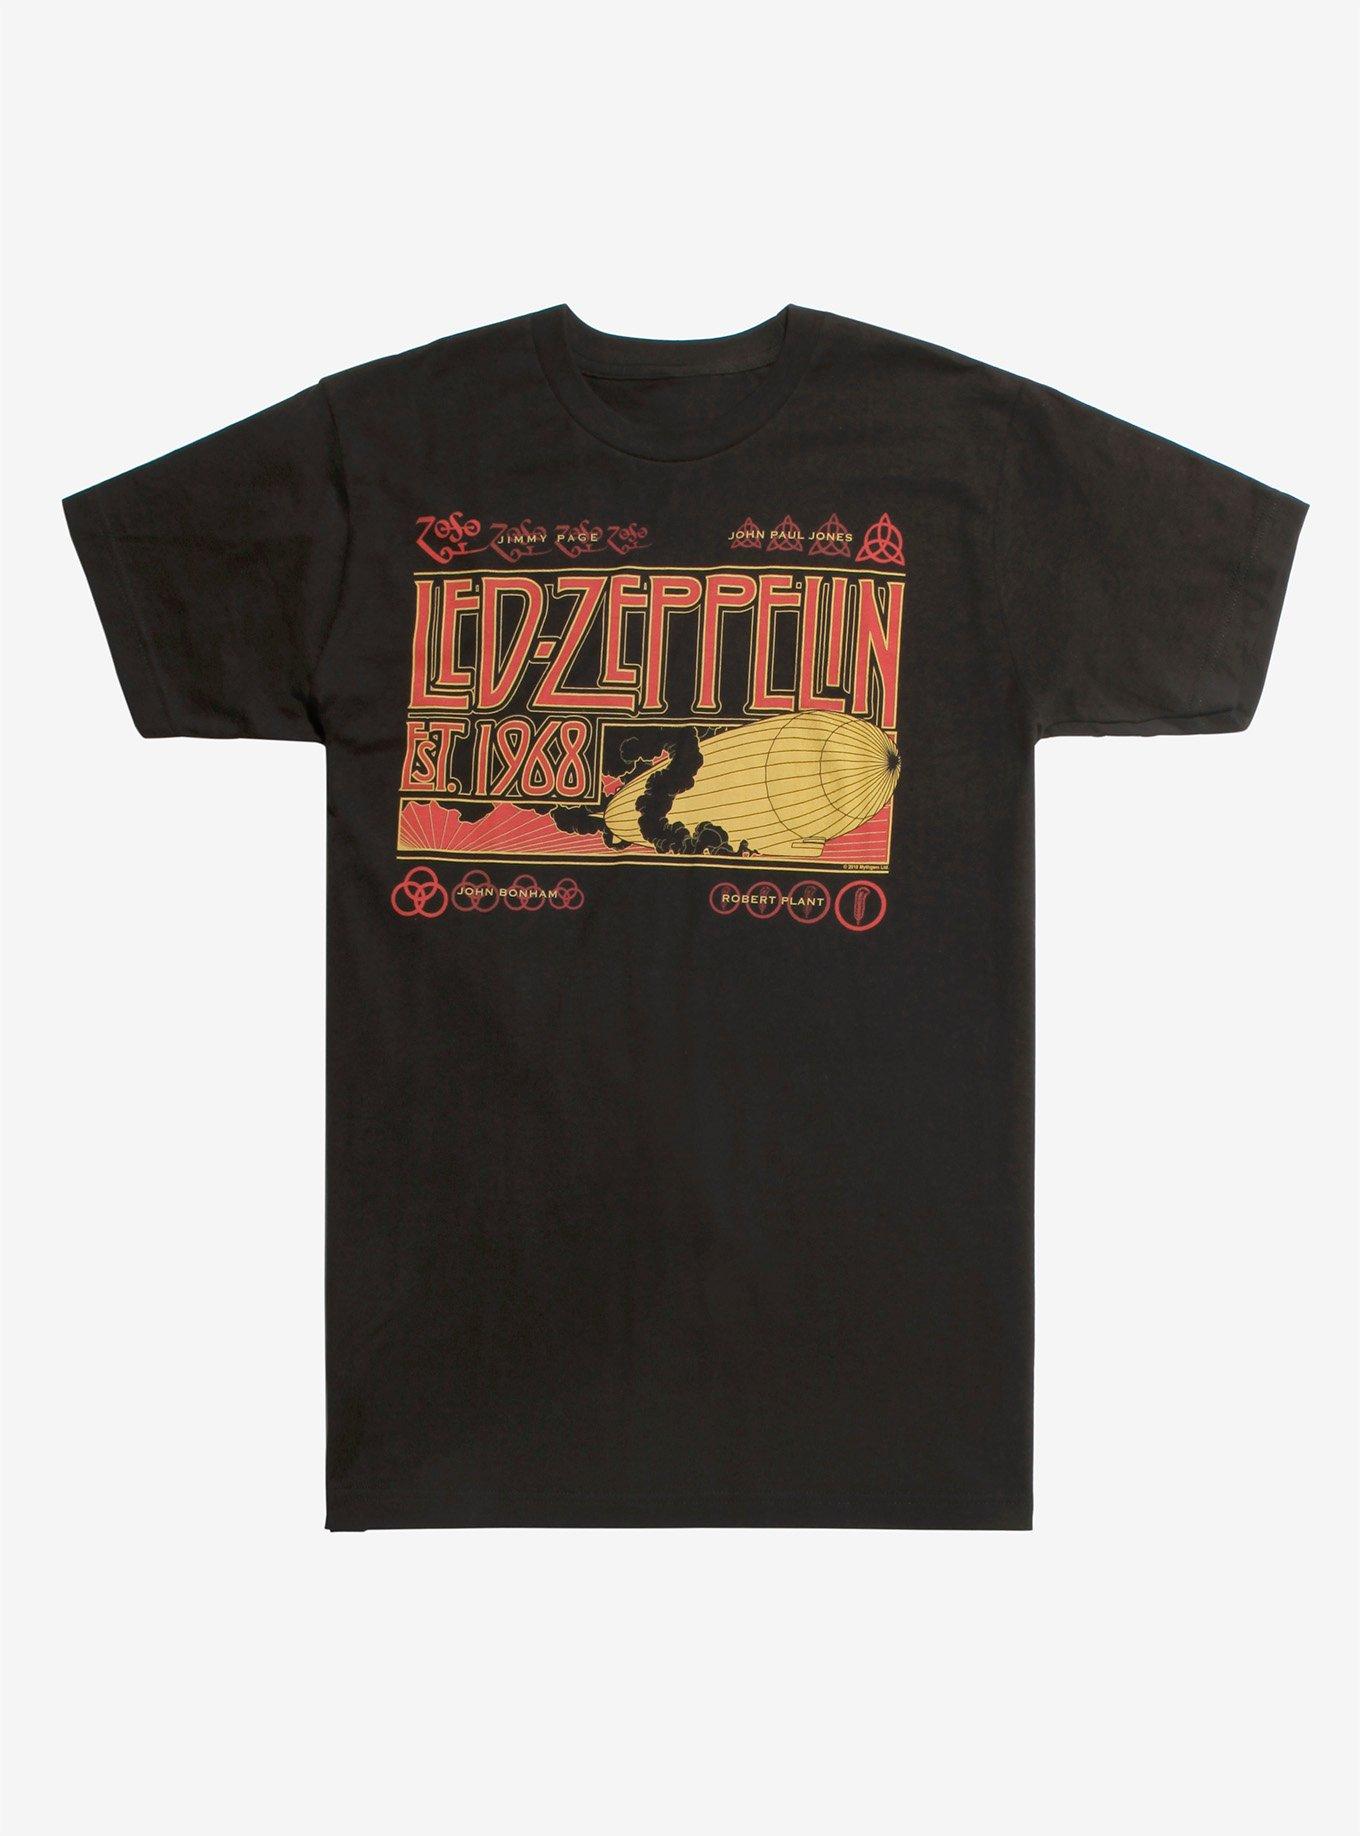 Led Zeppelin Established 1968 T-Shirt | Hot Topic